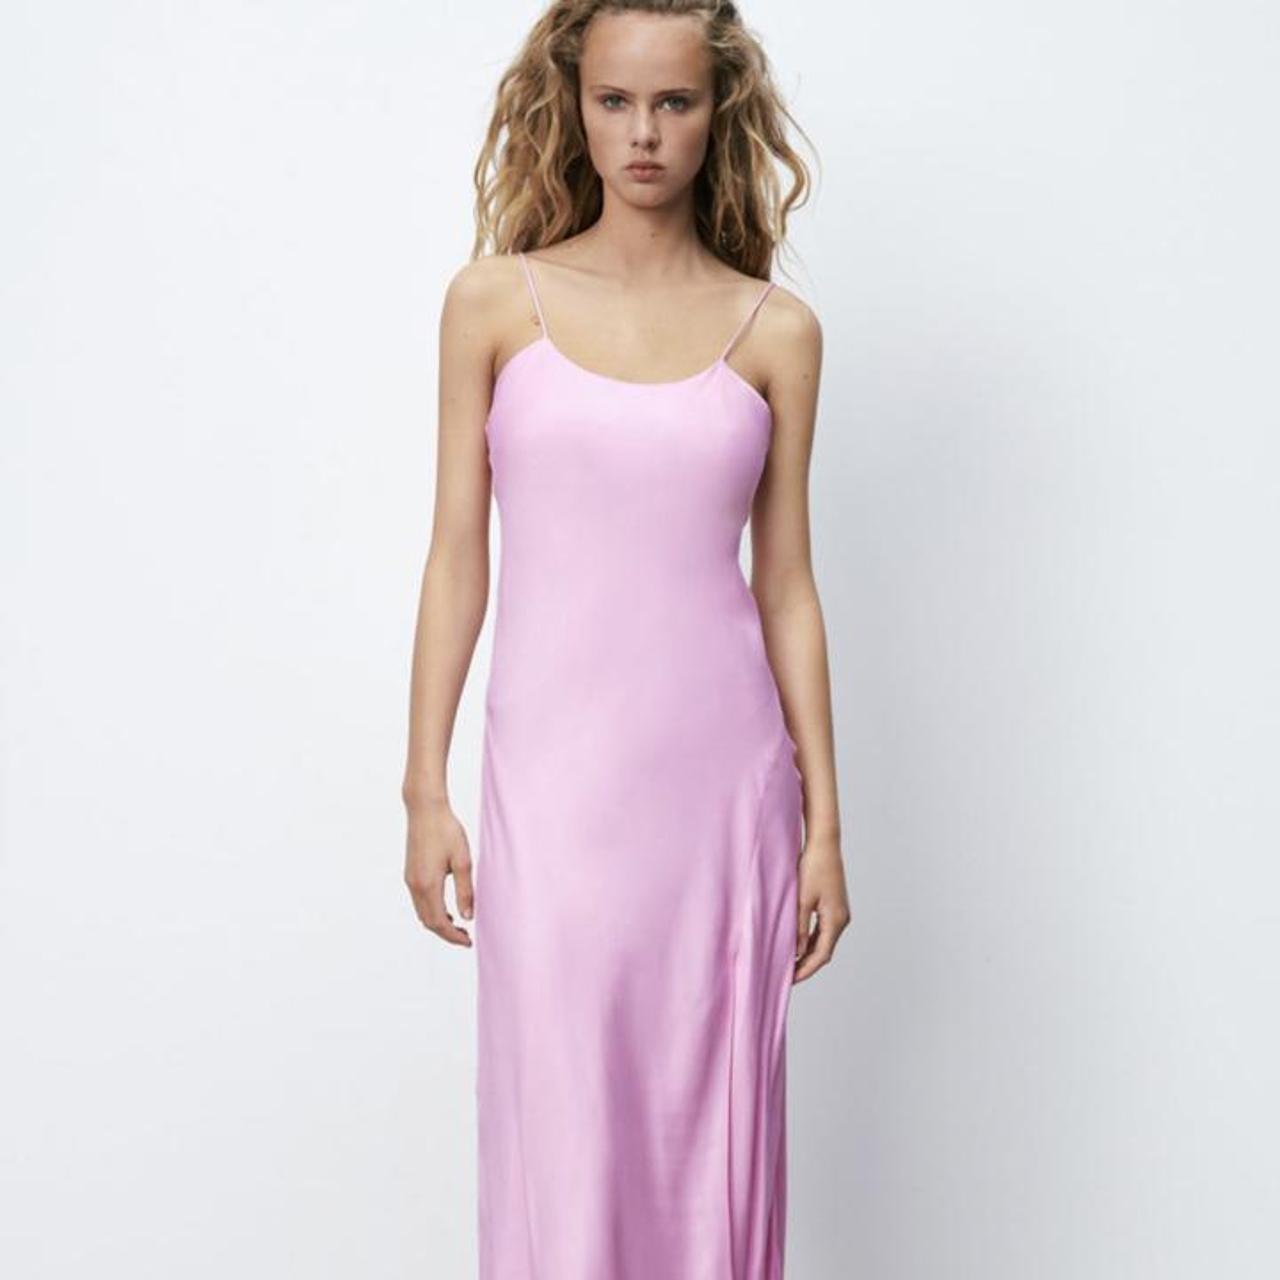 Zara + SATIN CAMISOLE DRESS